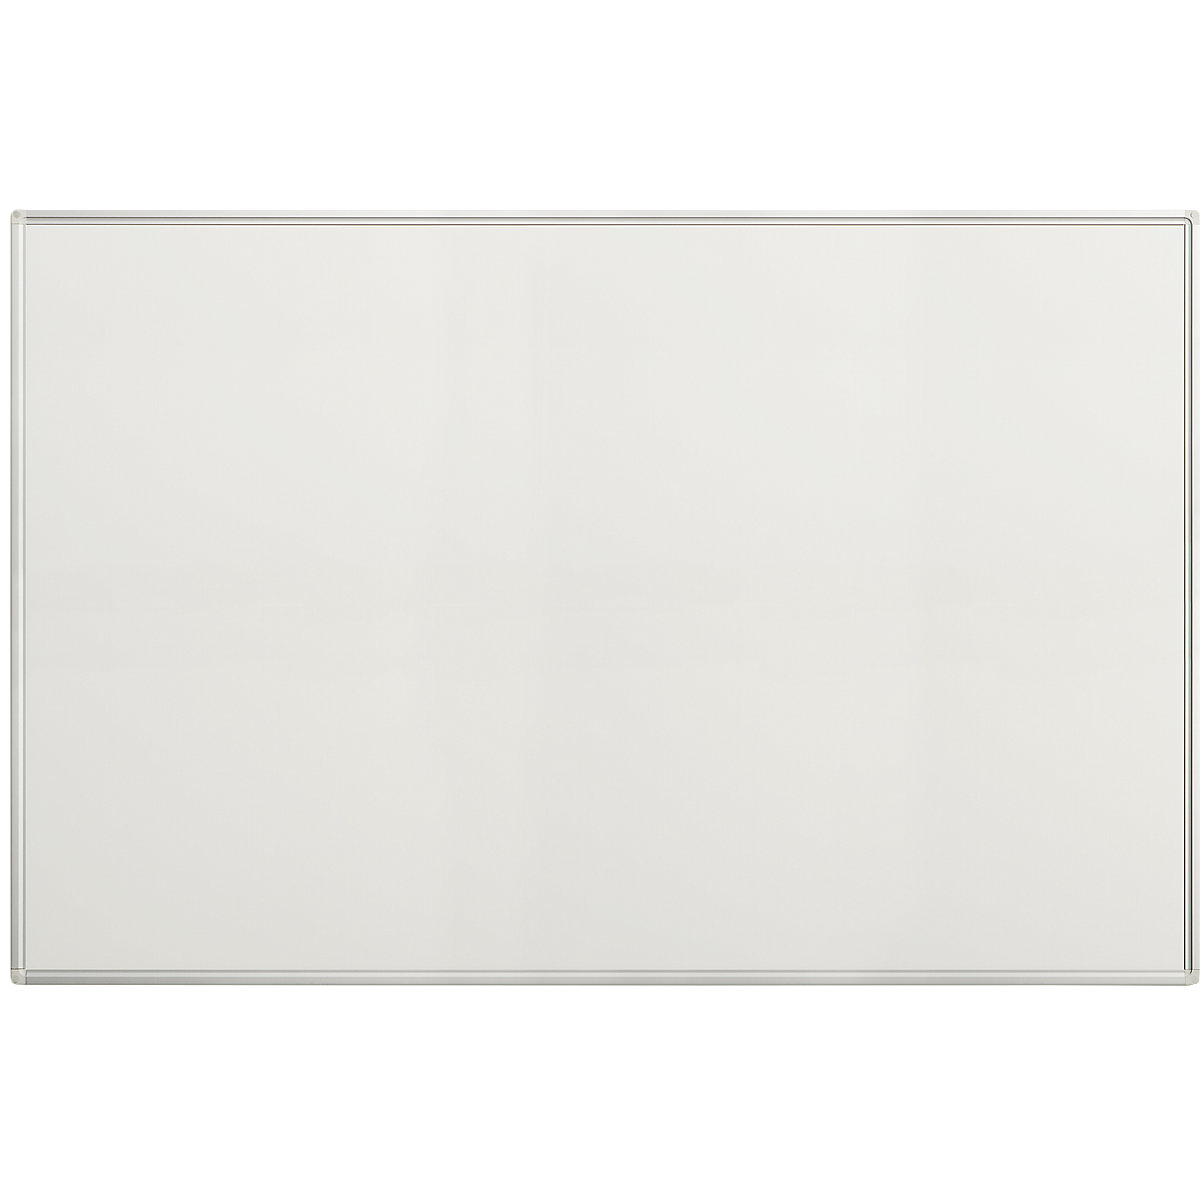 EUROKRAFTpro Whiteboard Economy, Stahlblech, lackiert, BxH 1500 x 1000 mm